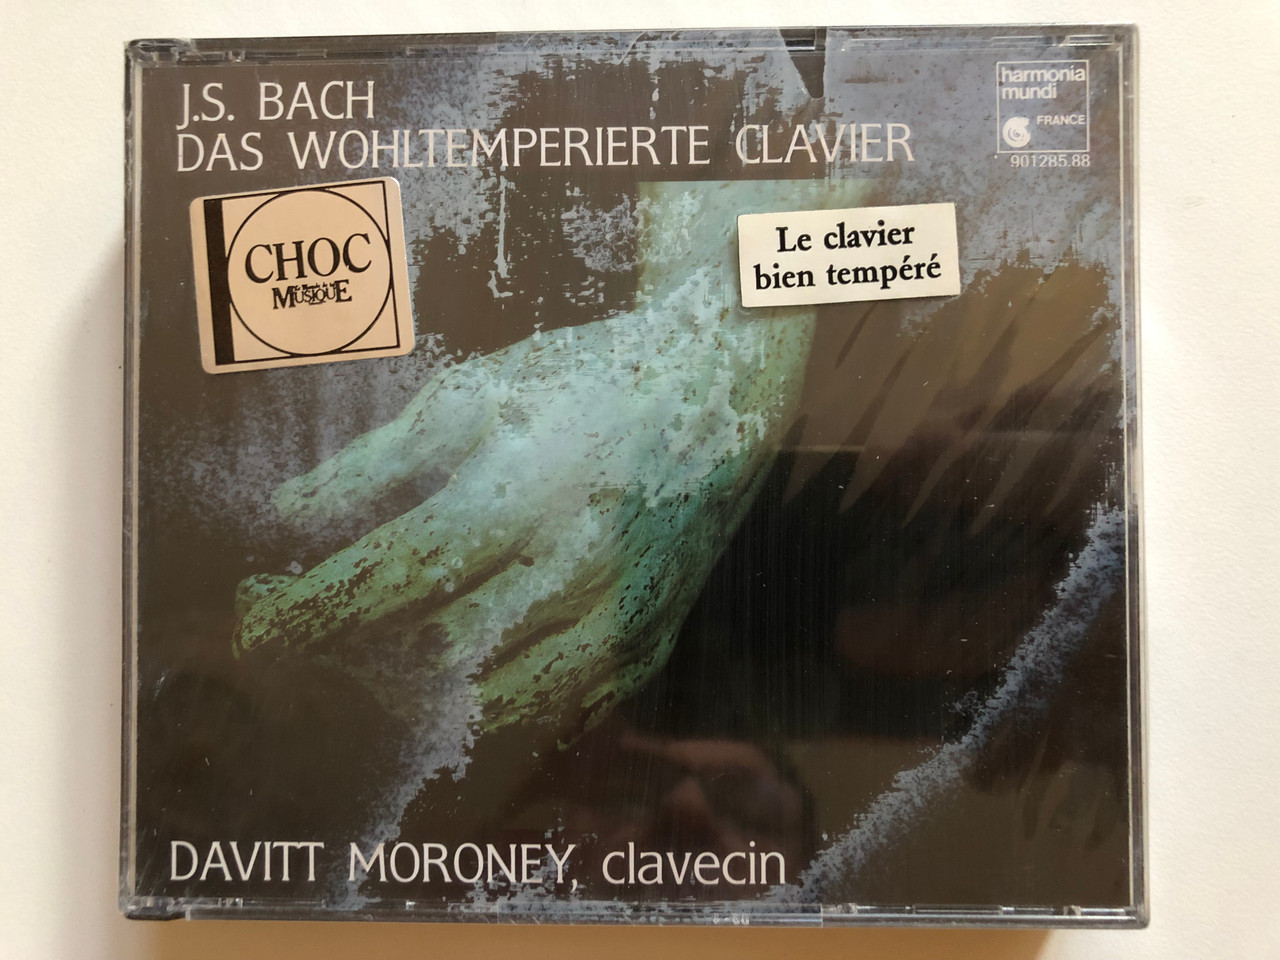 J. S. Bach - Das Wohltemperierte Clavier - Davitt Moroney (clavecin) /  Harmonia Mundi France 4x Audio CD 1988 / HMC 901285.88 - bibleinmylanguage